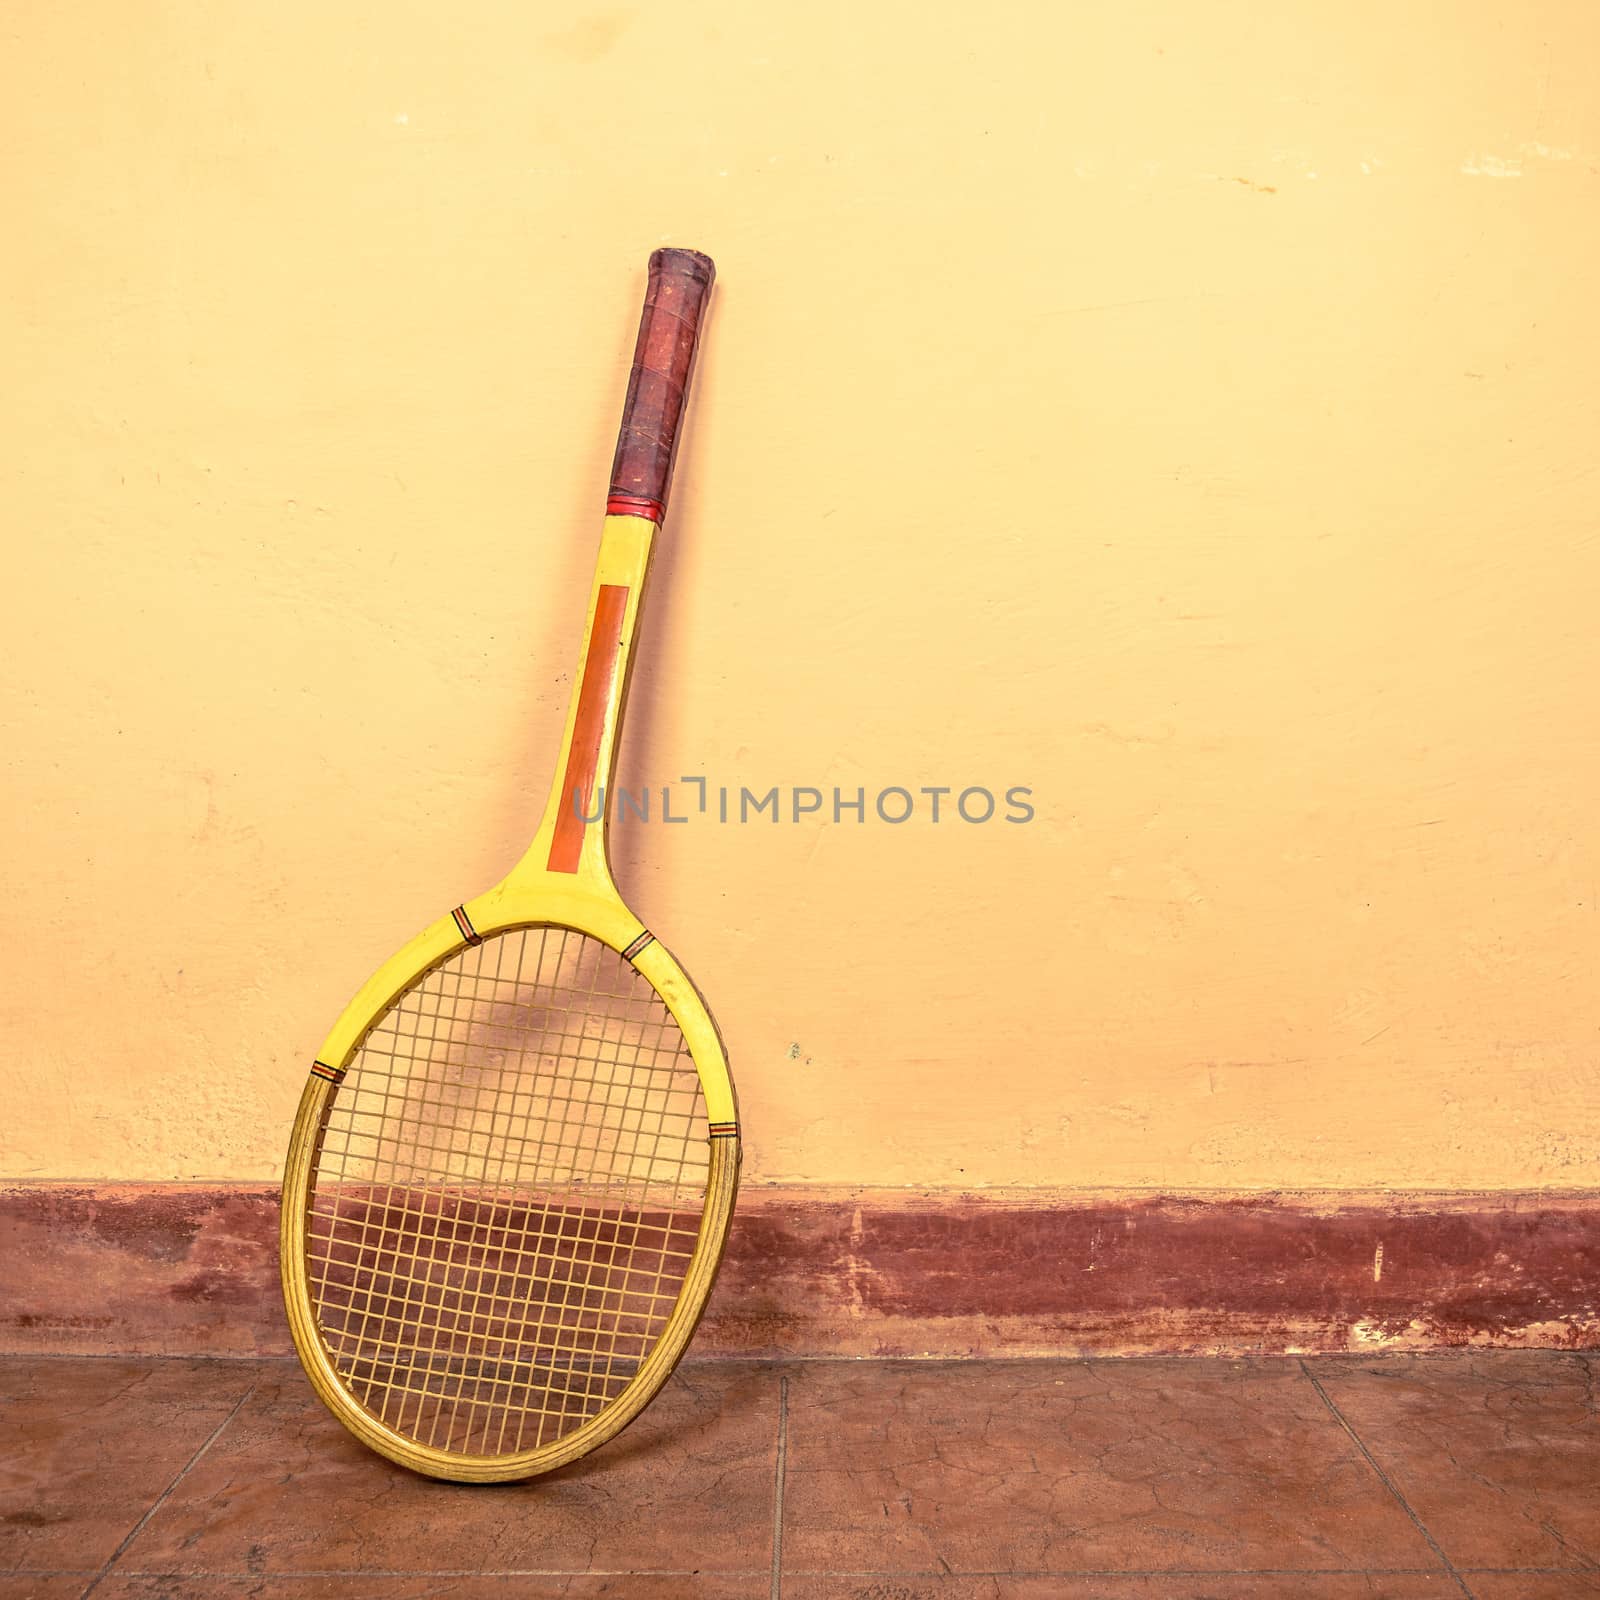 Vintage tennis racket against a wall